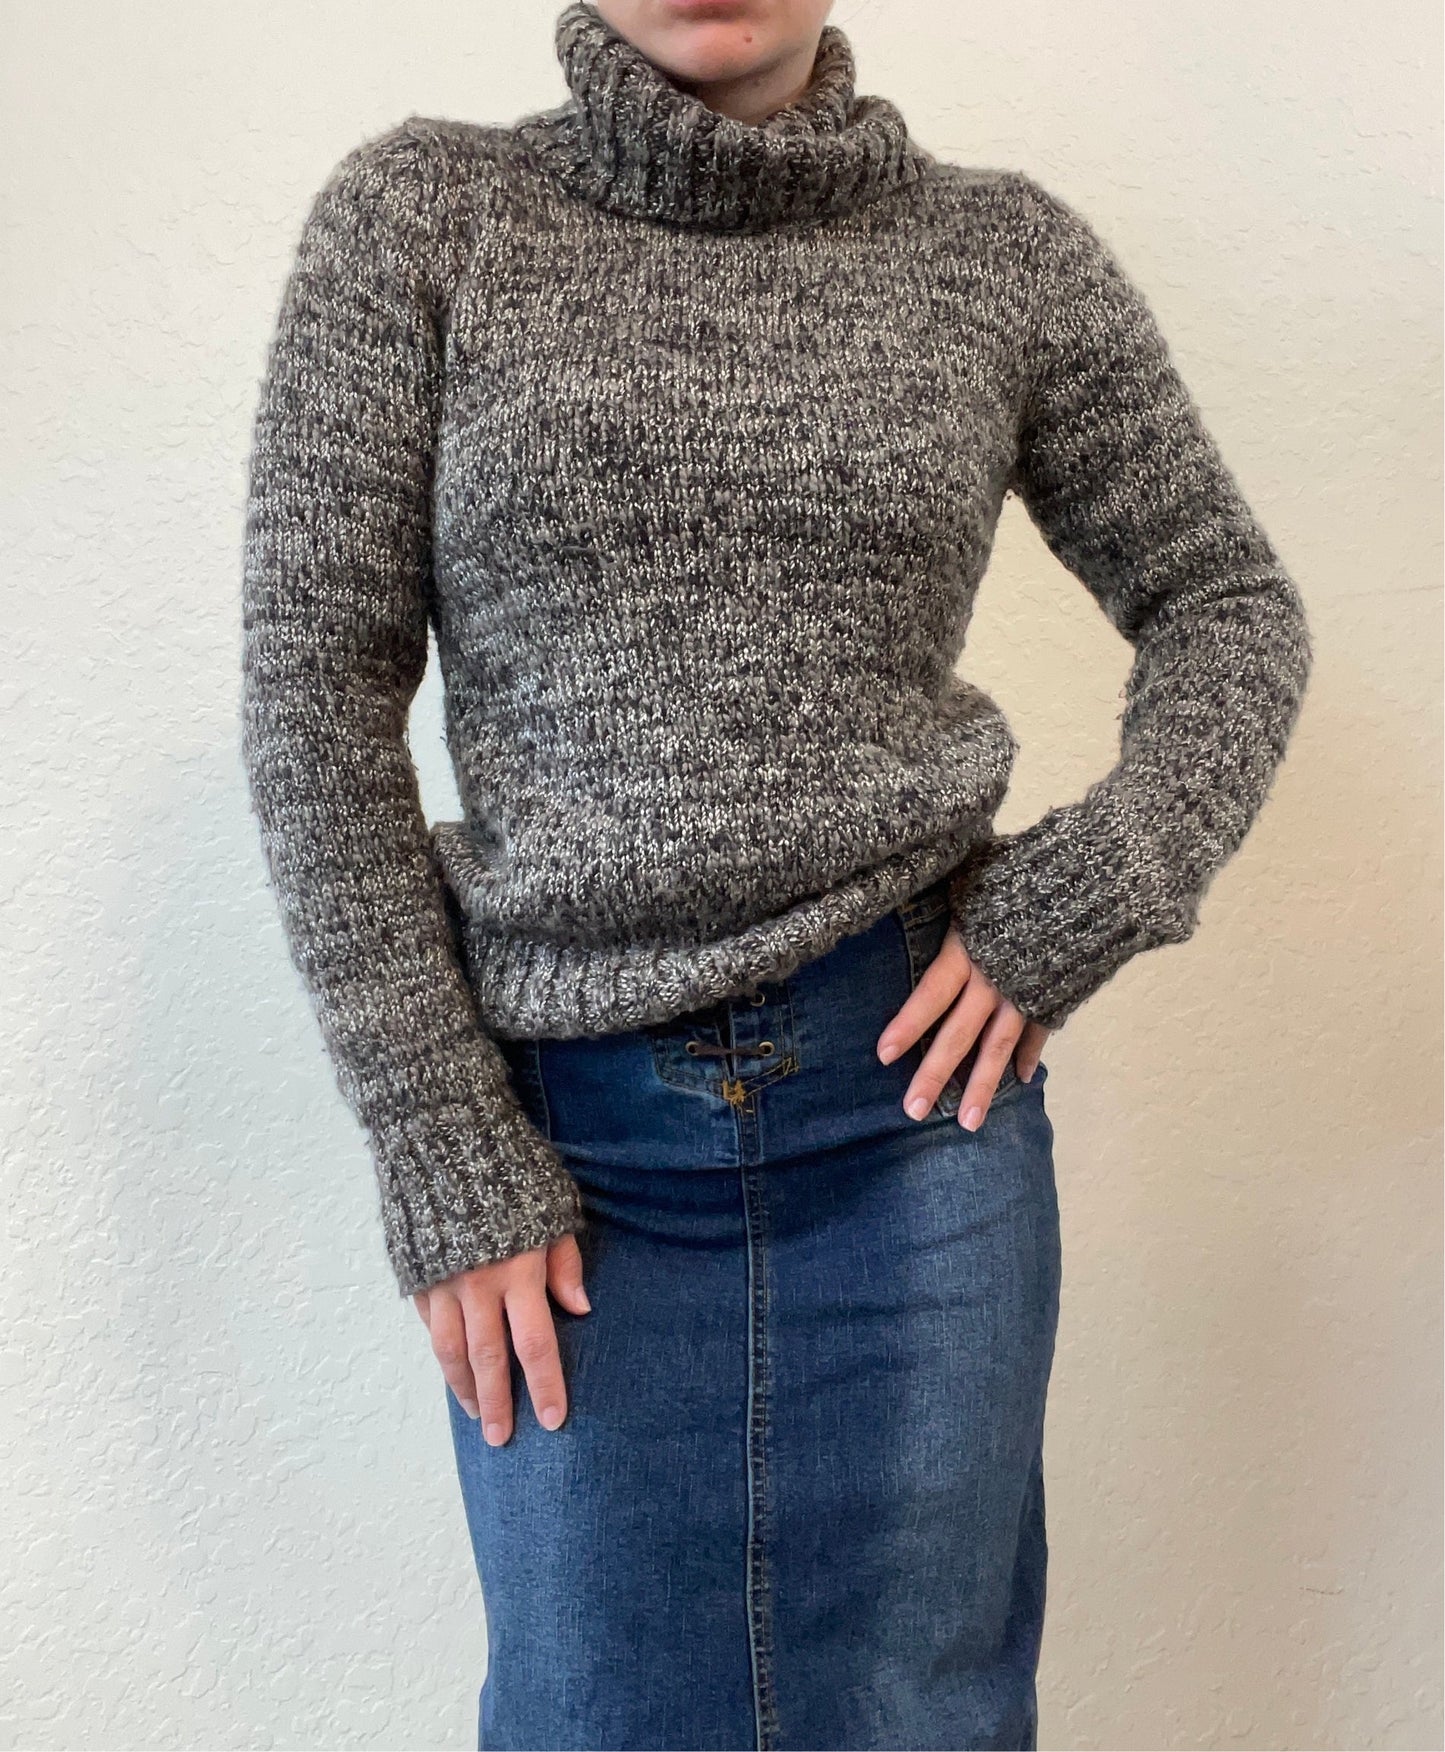 Knit turtleneck sweater